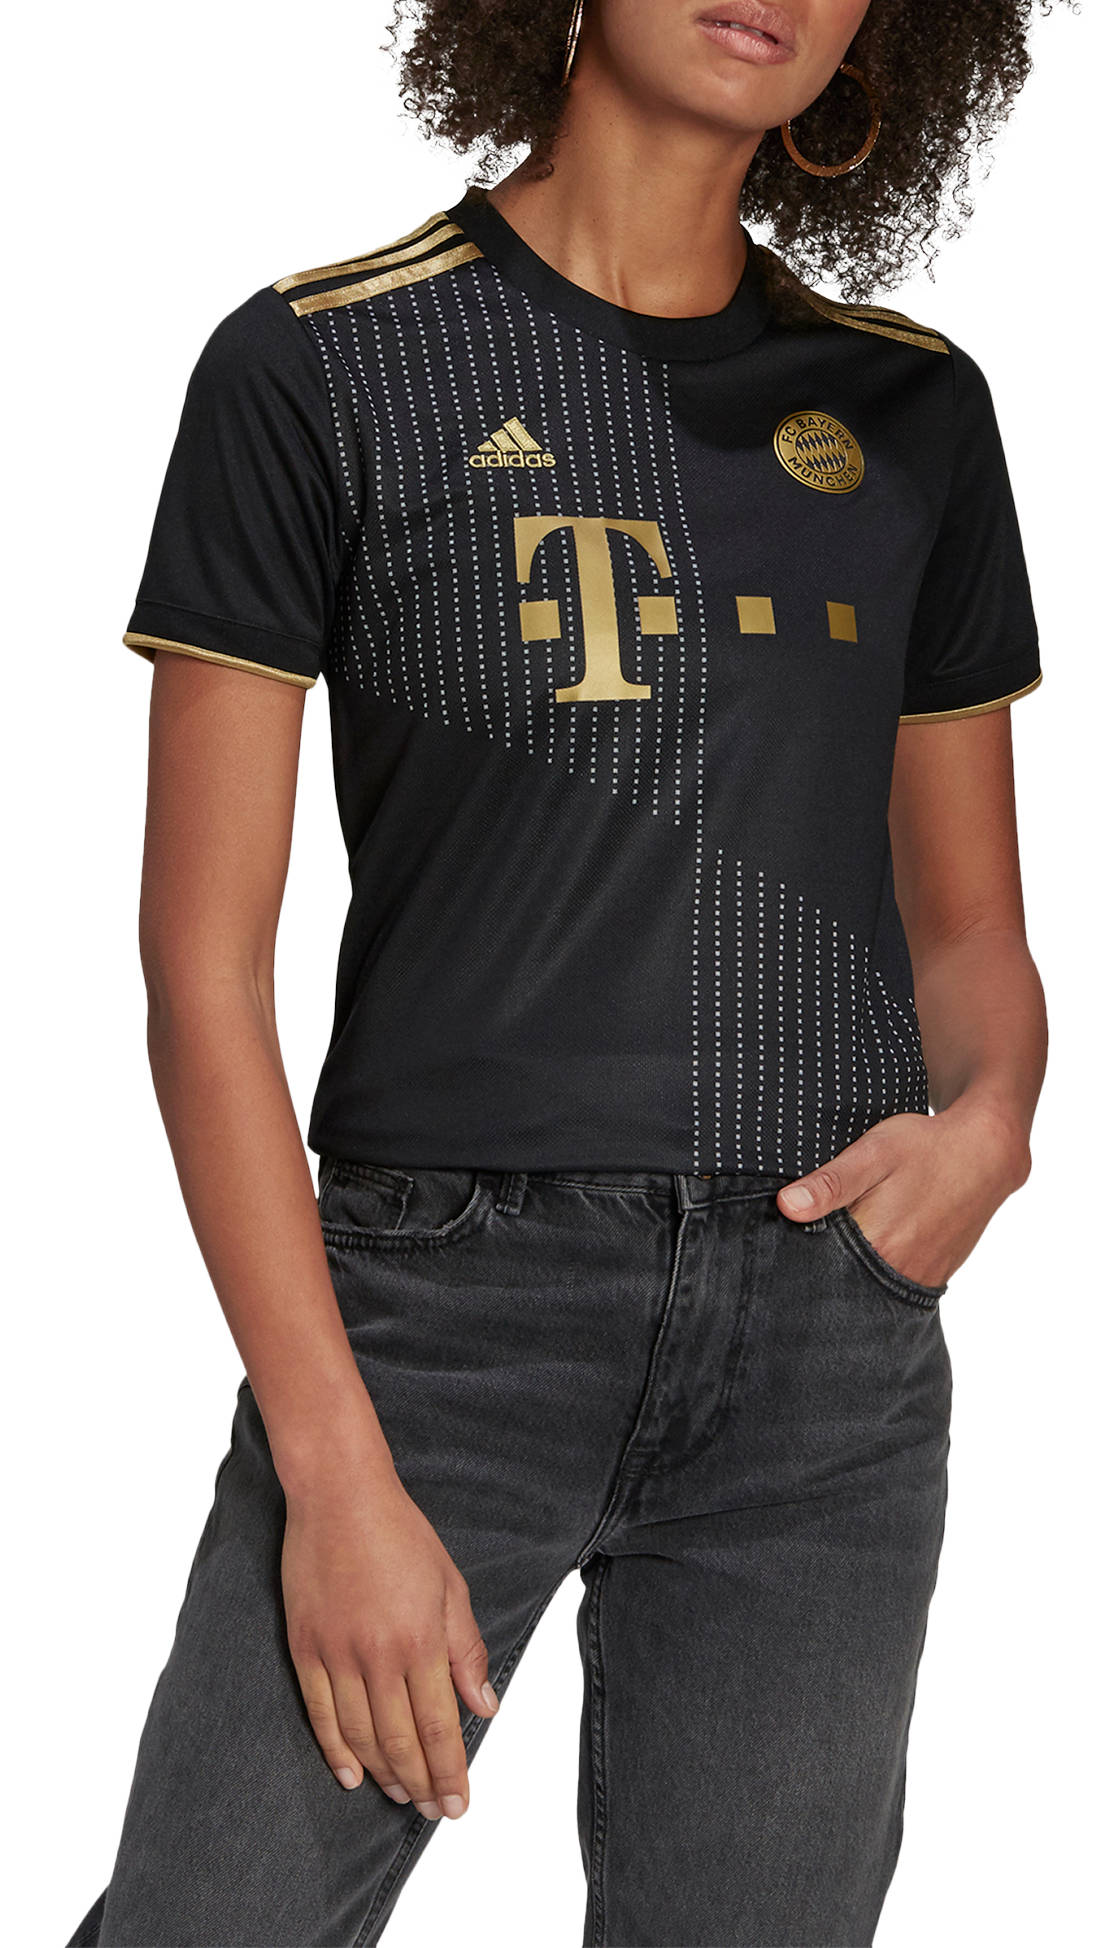 Shirt adidas FCB A JERSEY W 2021/22